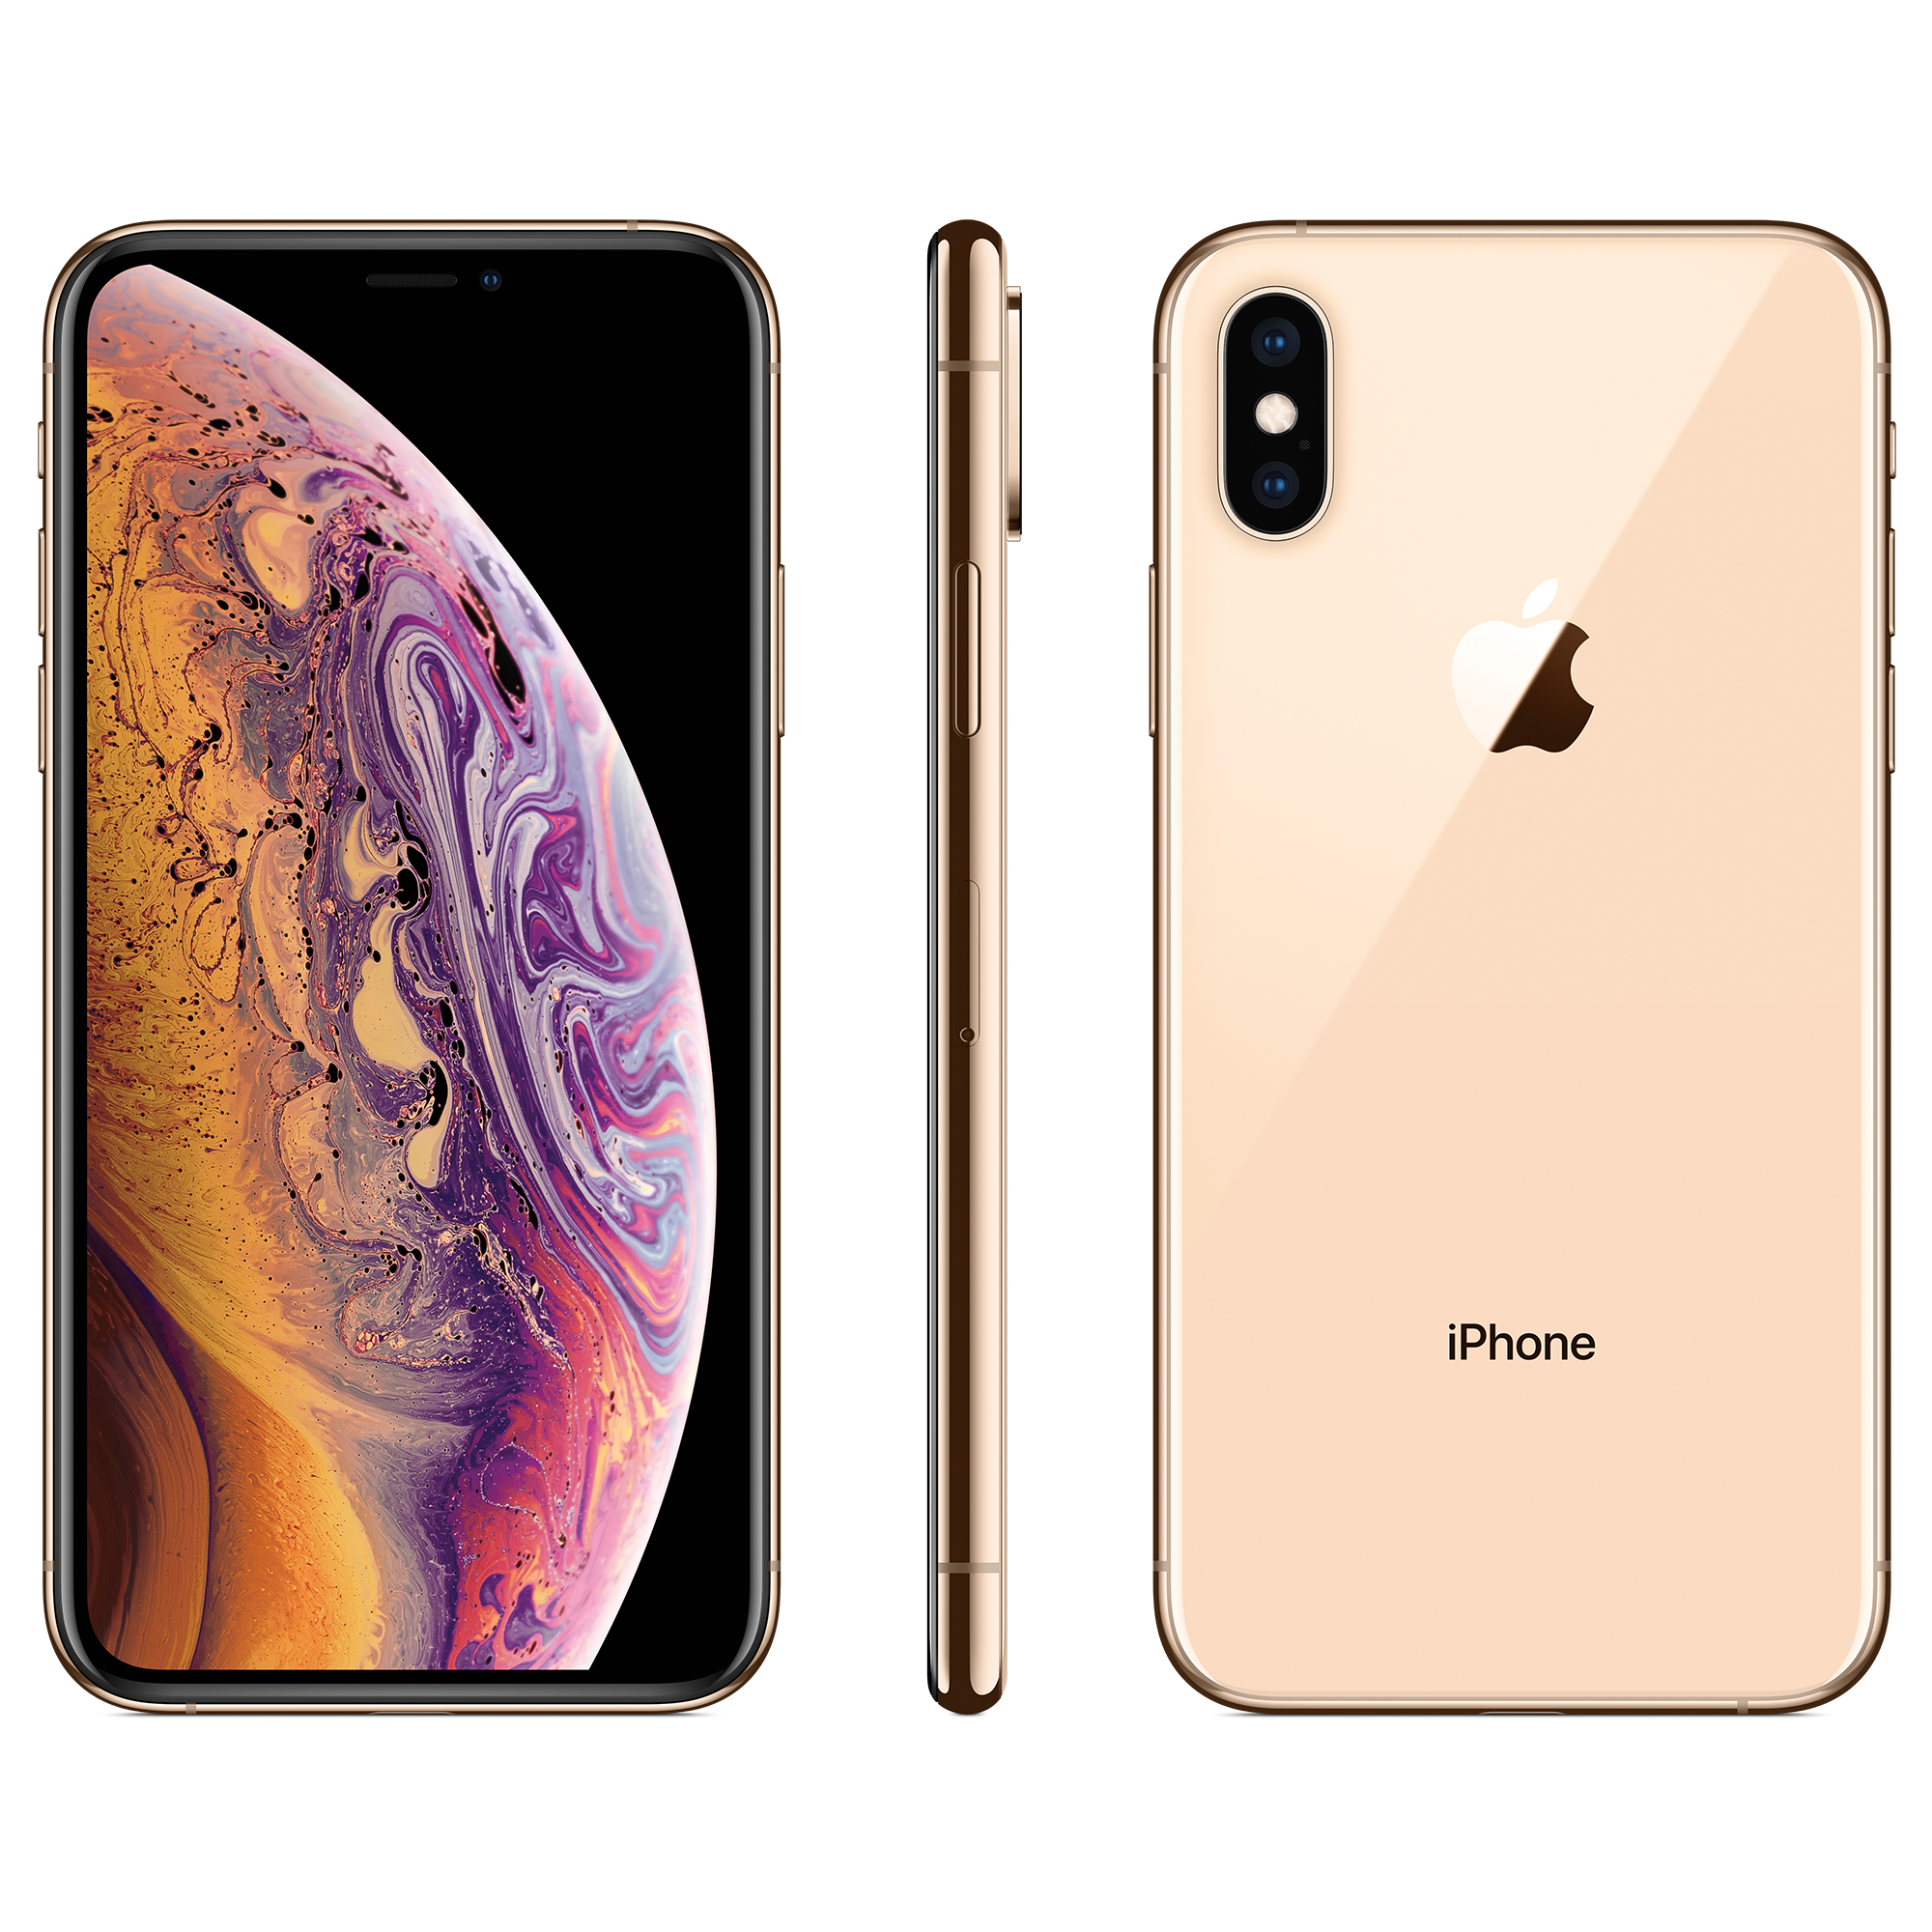 Apple Iphone XS Price in Pakistan 2022